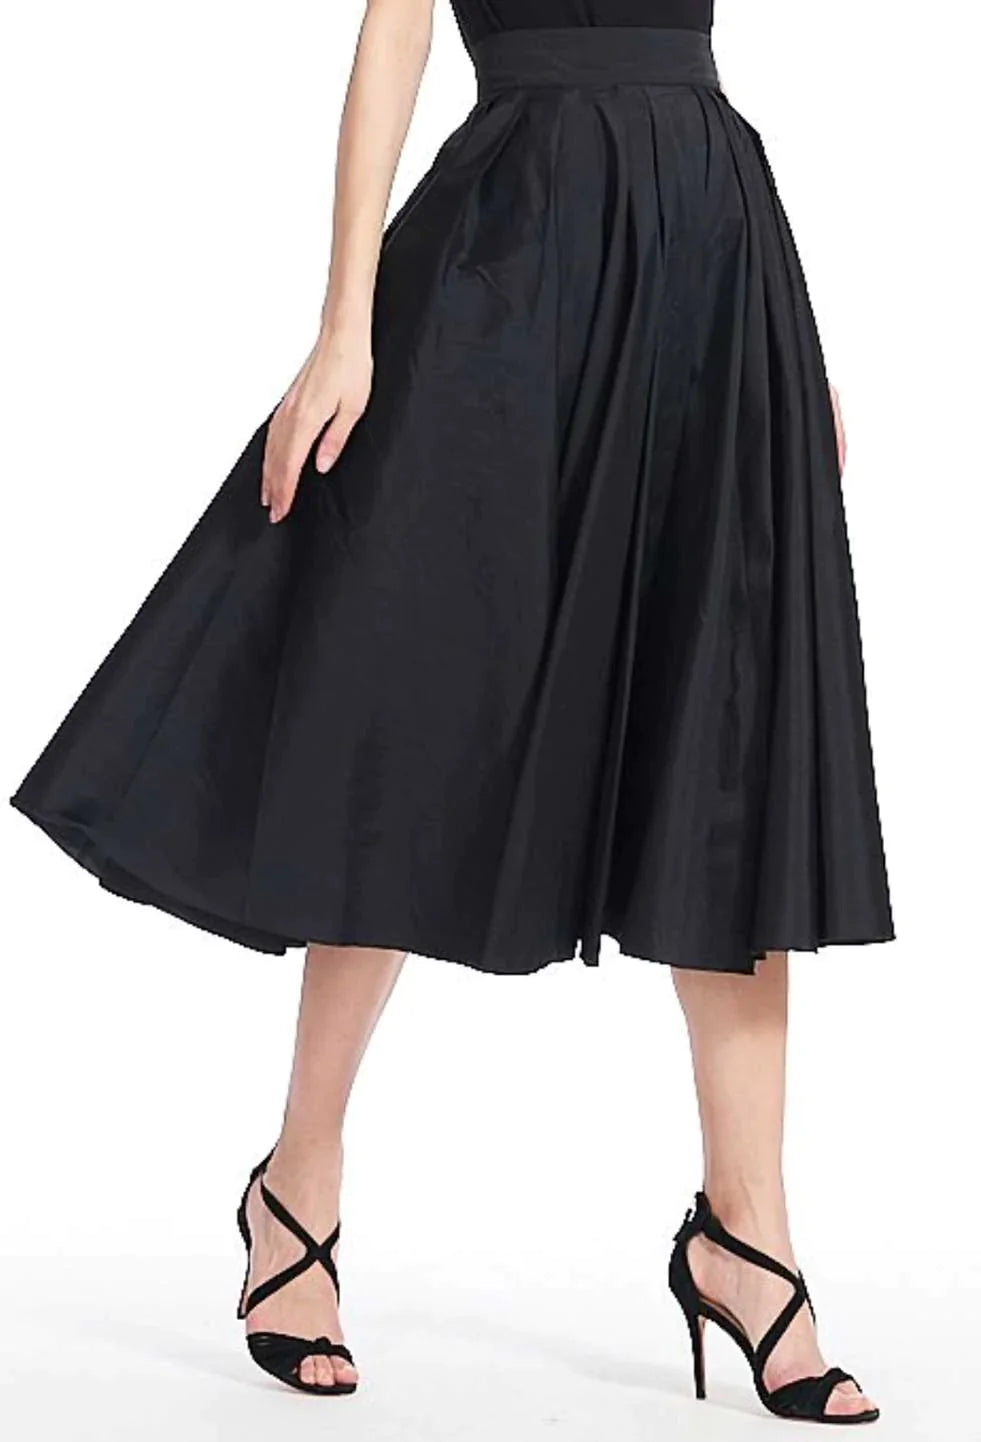 Classic Colors Taffeta Tea Length Midi Skirt